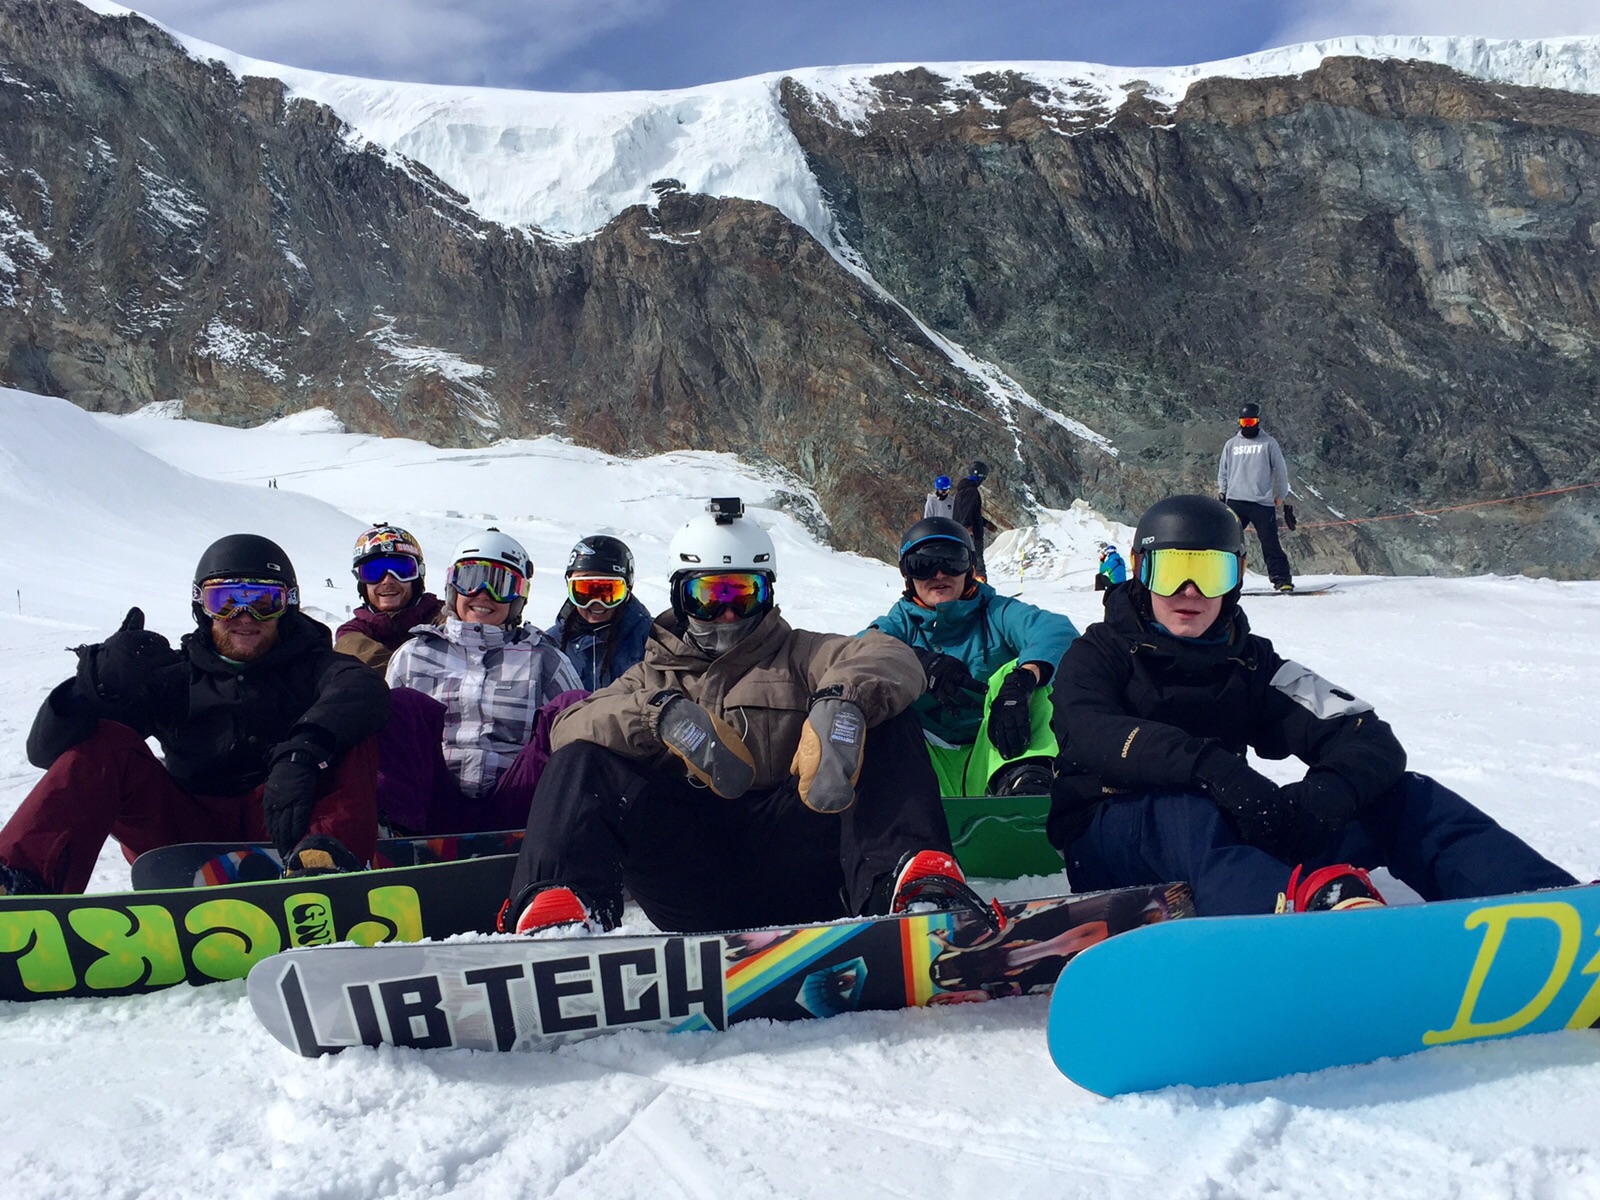 Saas Fee 10 Week Ski & Snowboard Instructor Course 2015: Glacier life at 3,500m